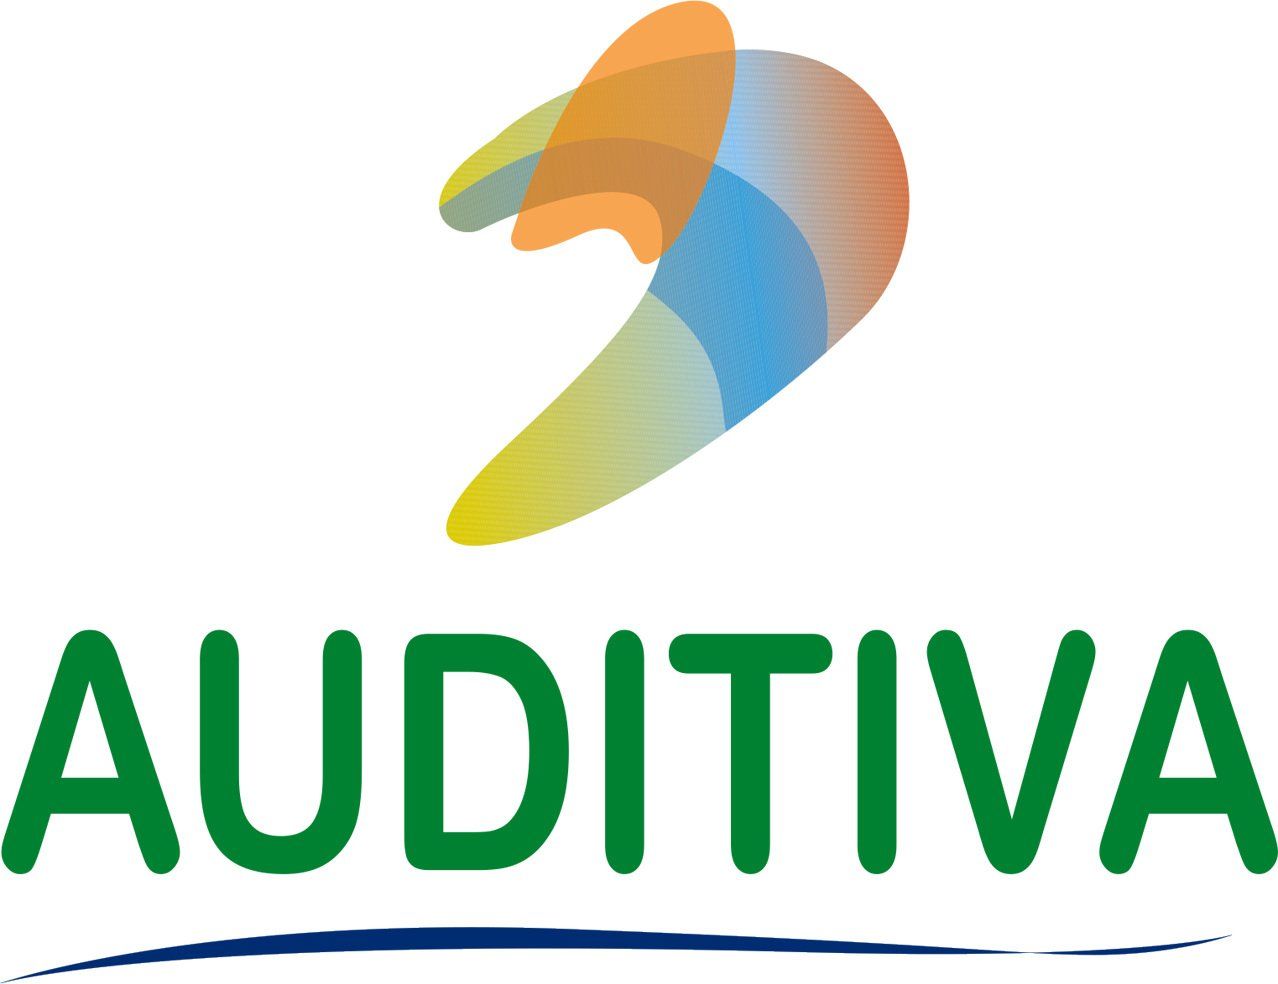 Auditiva logo